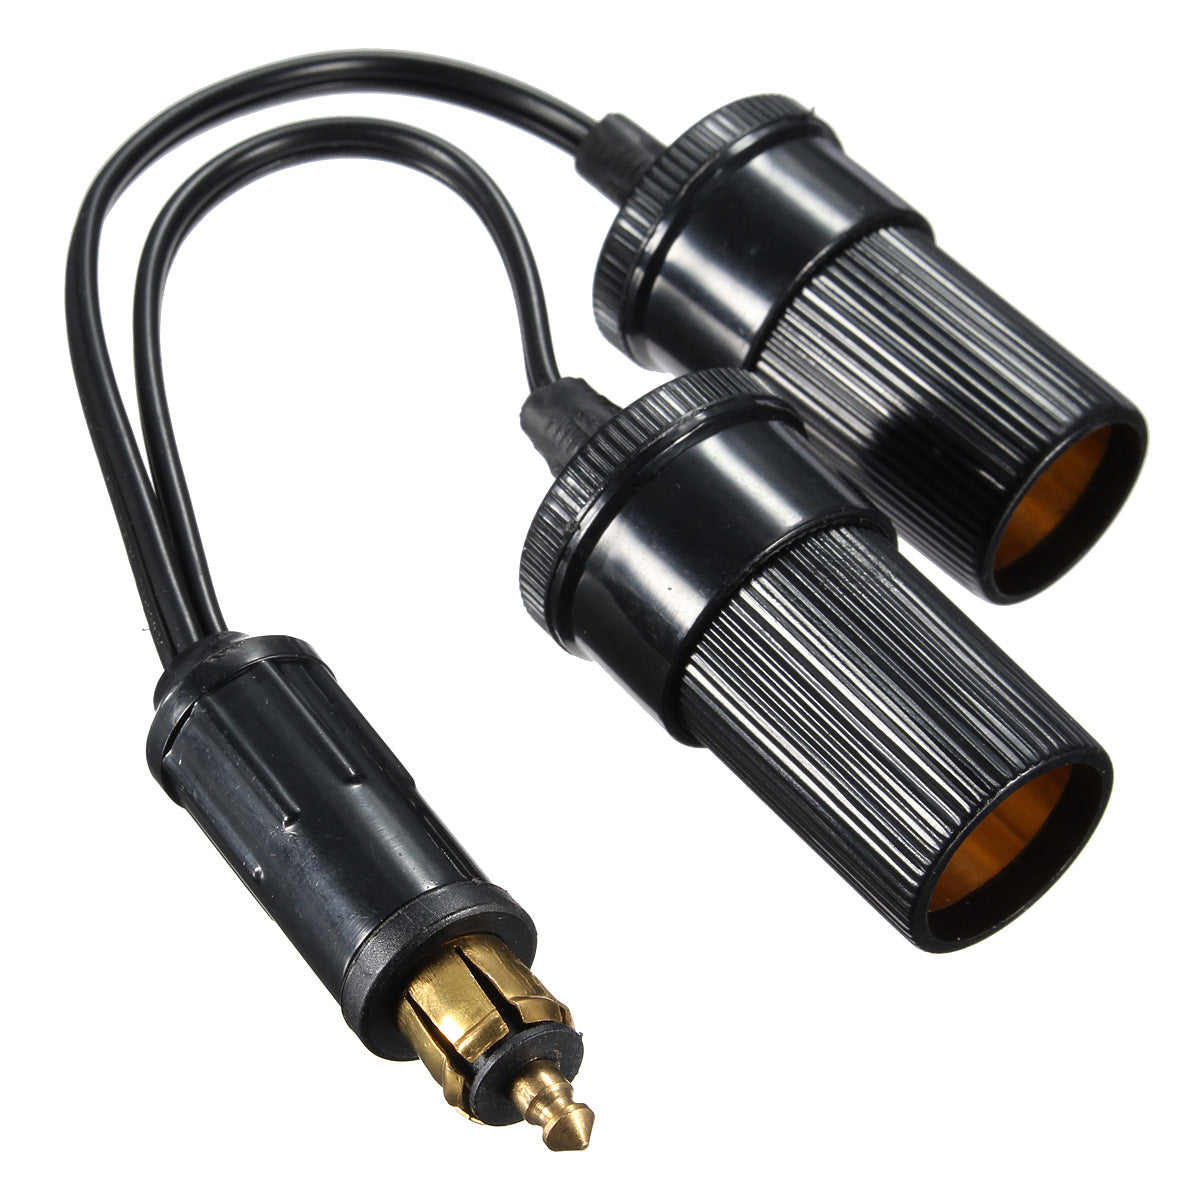 Black Car Lighter Adaptor Converter Hella Plug To Twin Socket